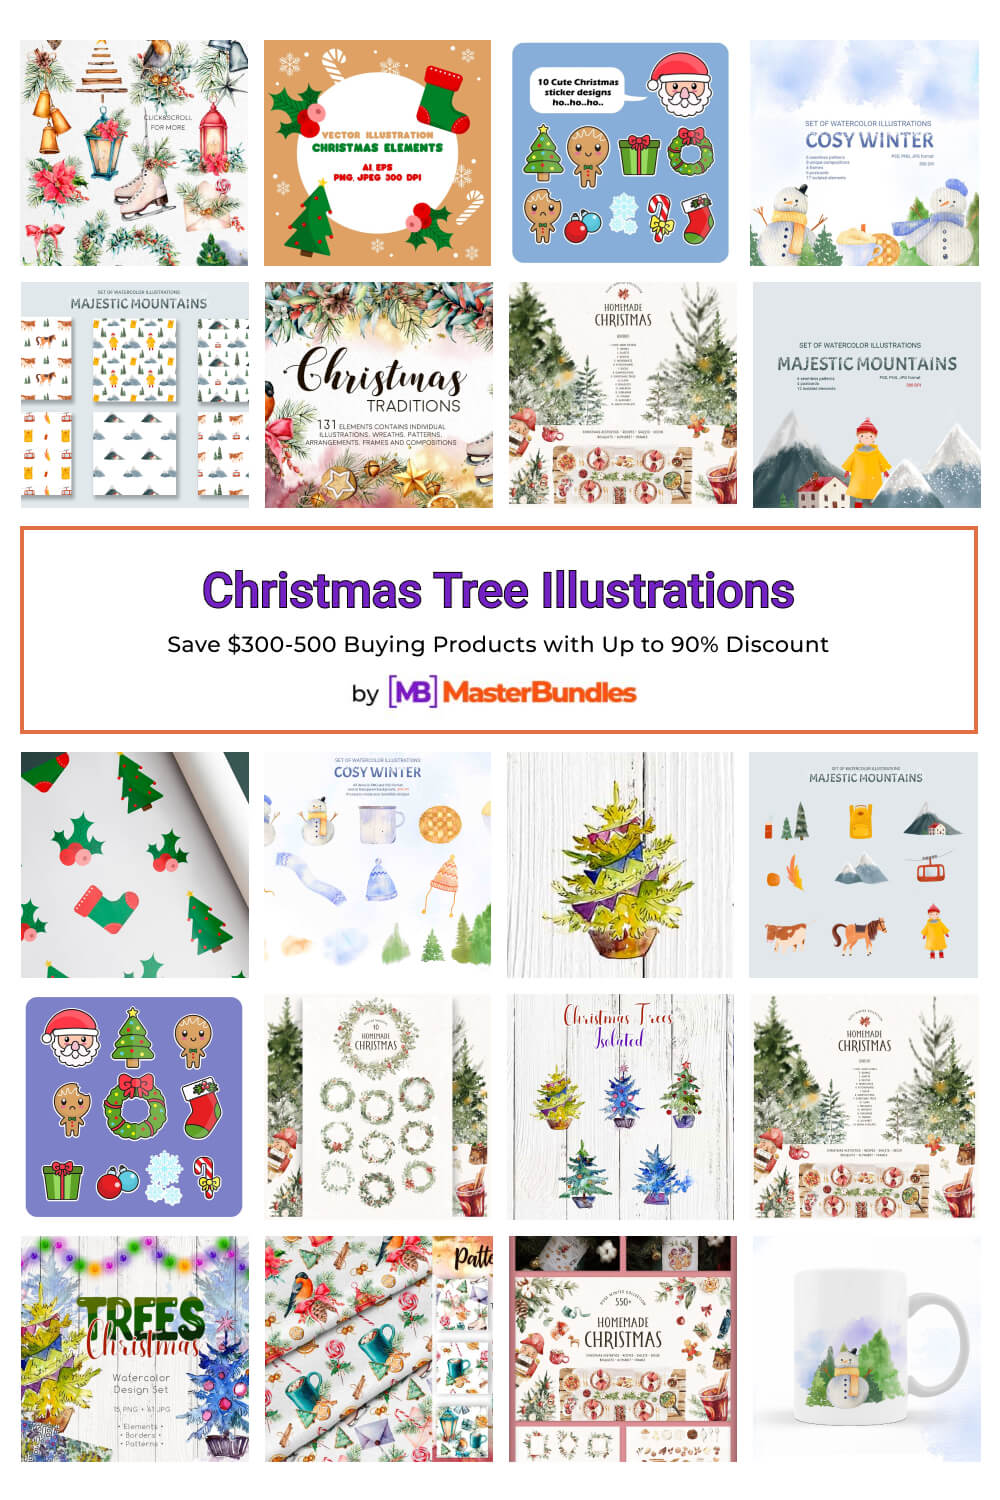 christmas tree illustrations pinterest image.